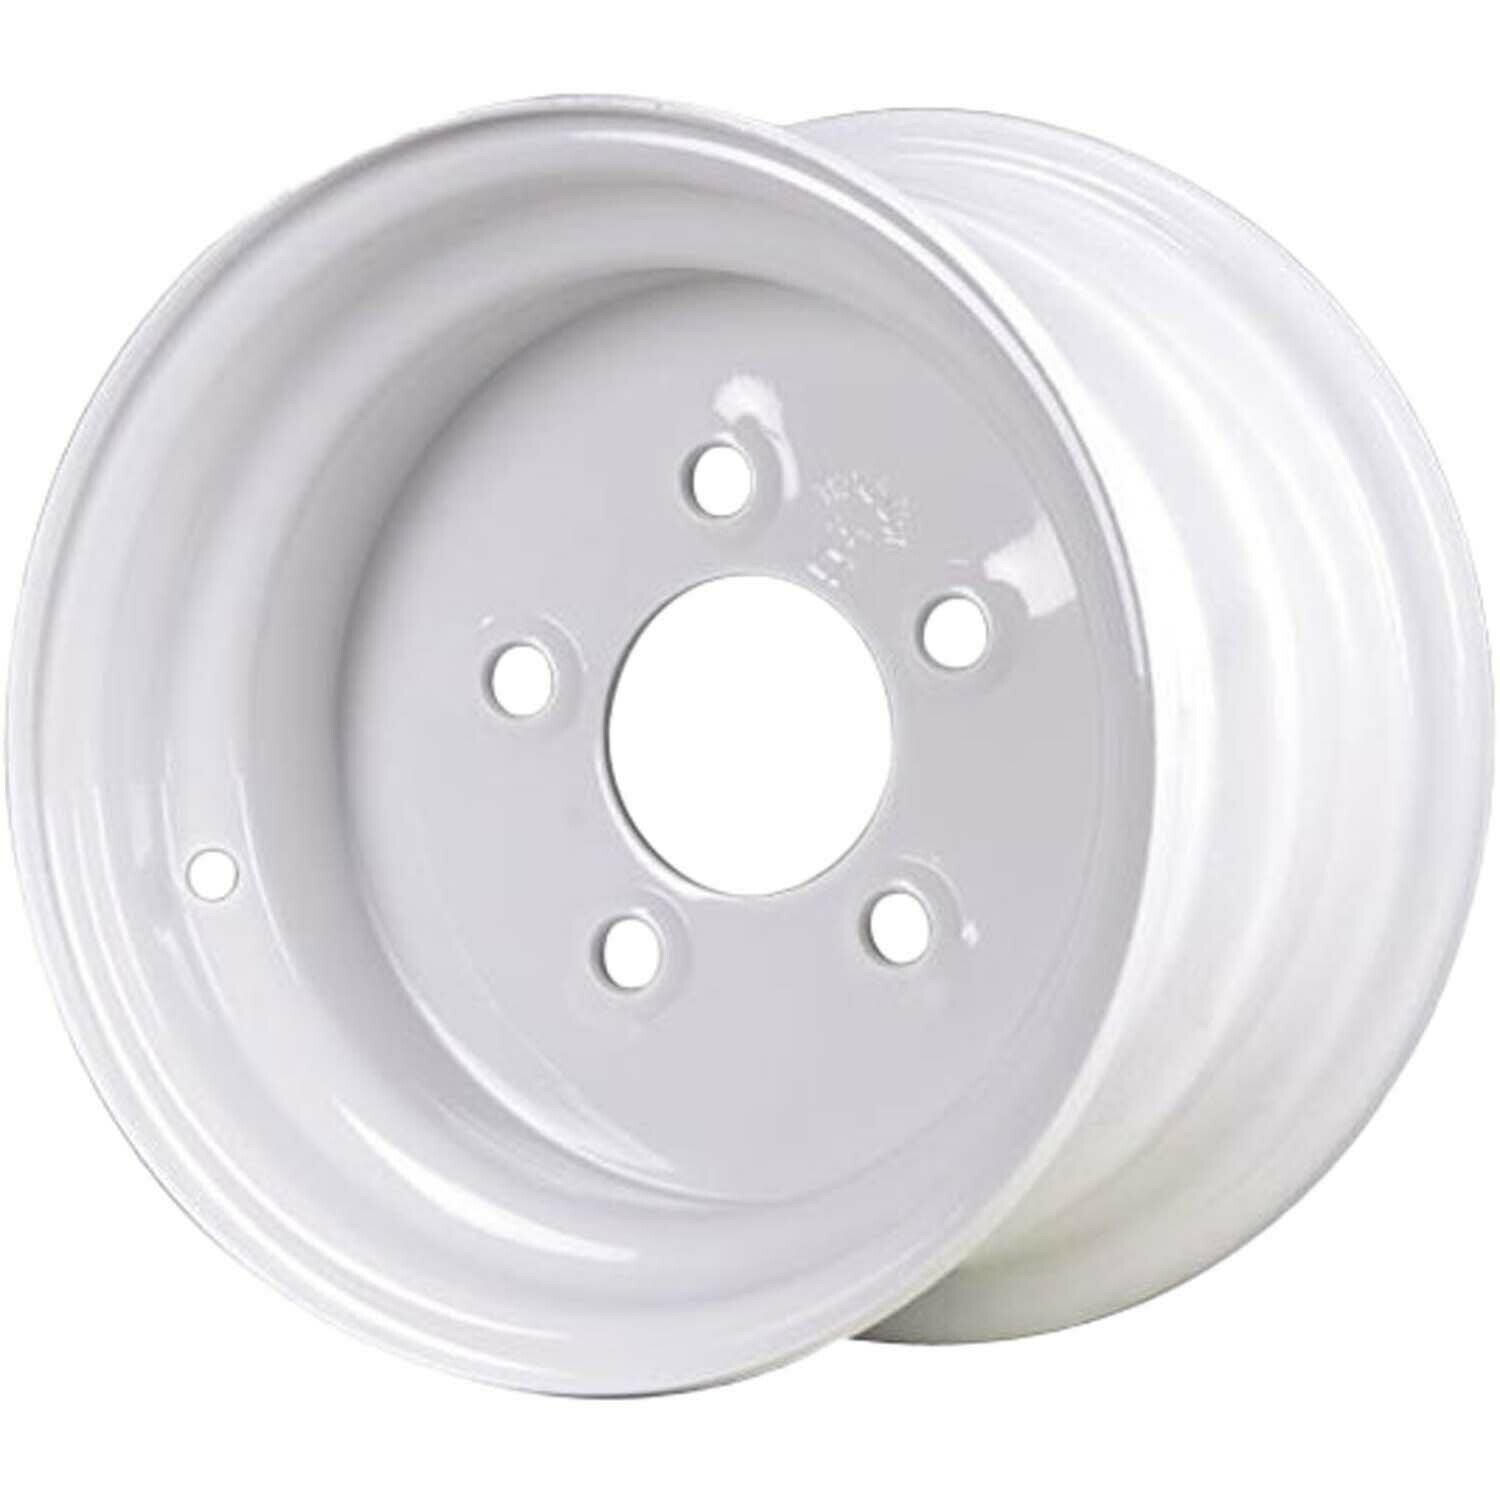 10x6 5 On 4.5 Steel Trailer Wheel - White 900 lb Load Capacity